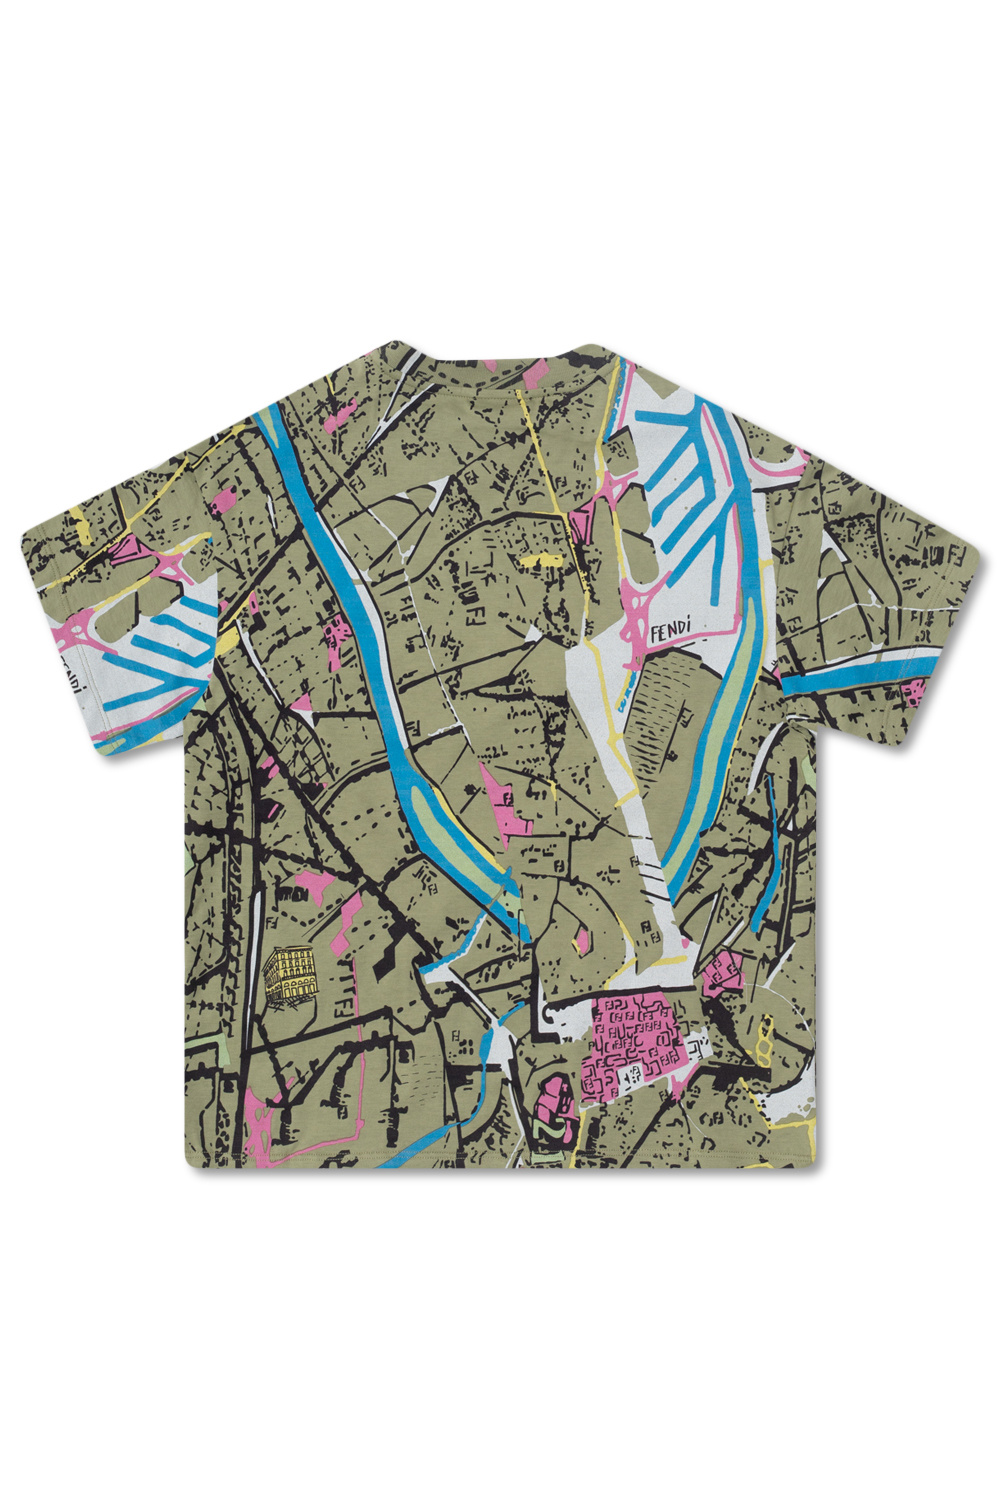 Fendi Kids you fendi Map T-shirt